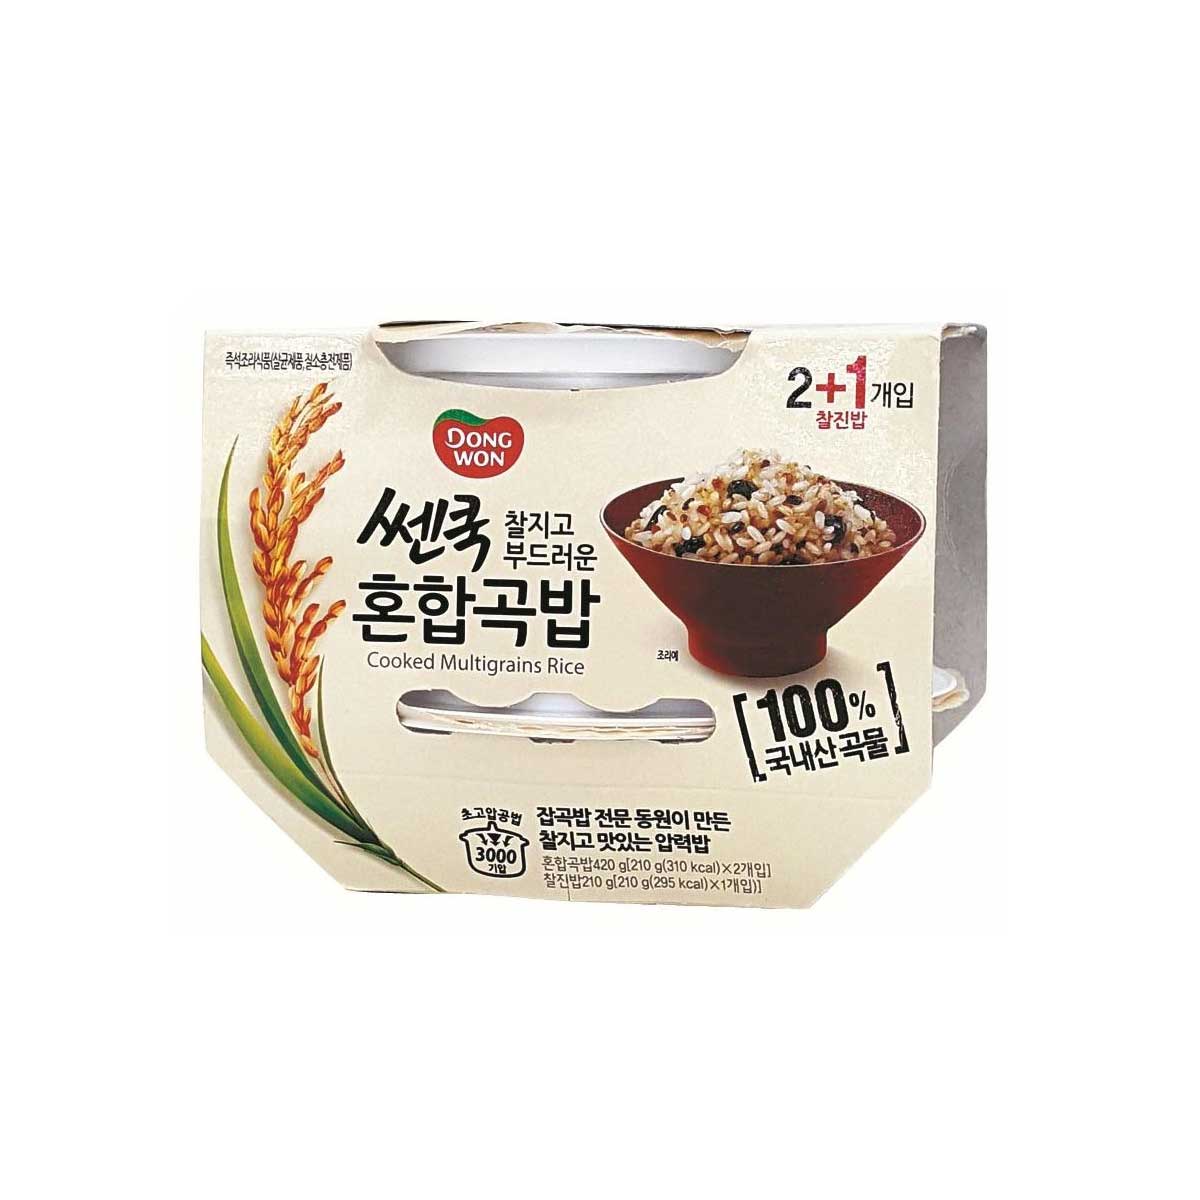 Cooked Mixed Grain Rice + Cooked Rice 6/3/210g 건강한 혼합곡밥 웰빙기획(2+찰진밥1)(찰진)